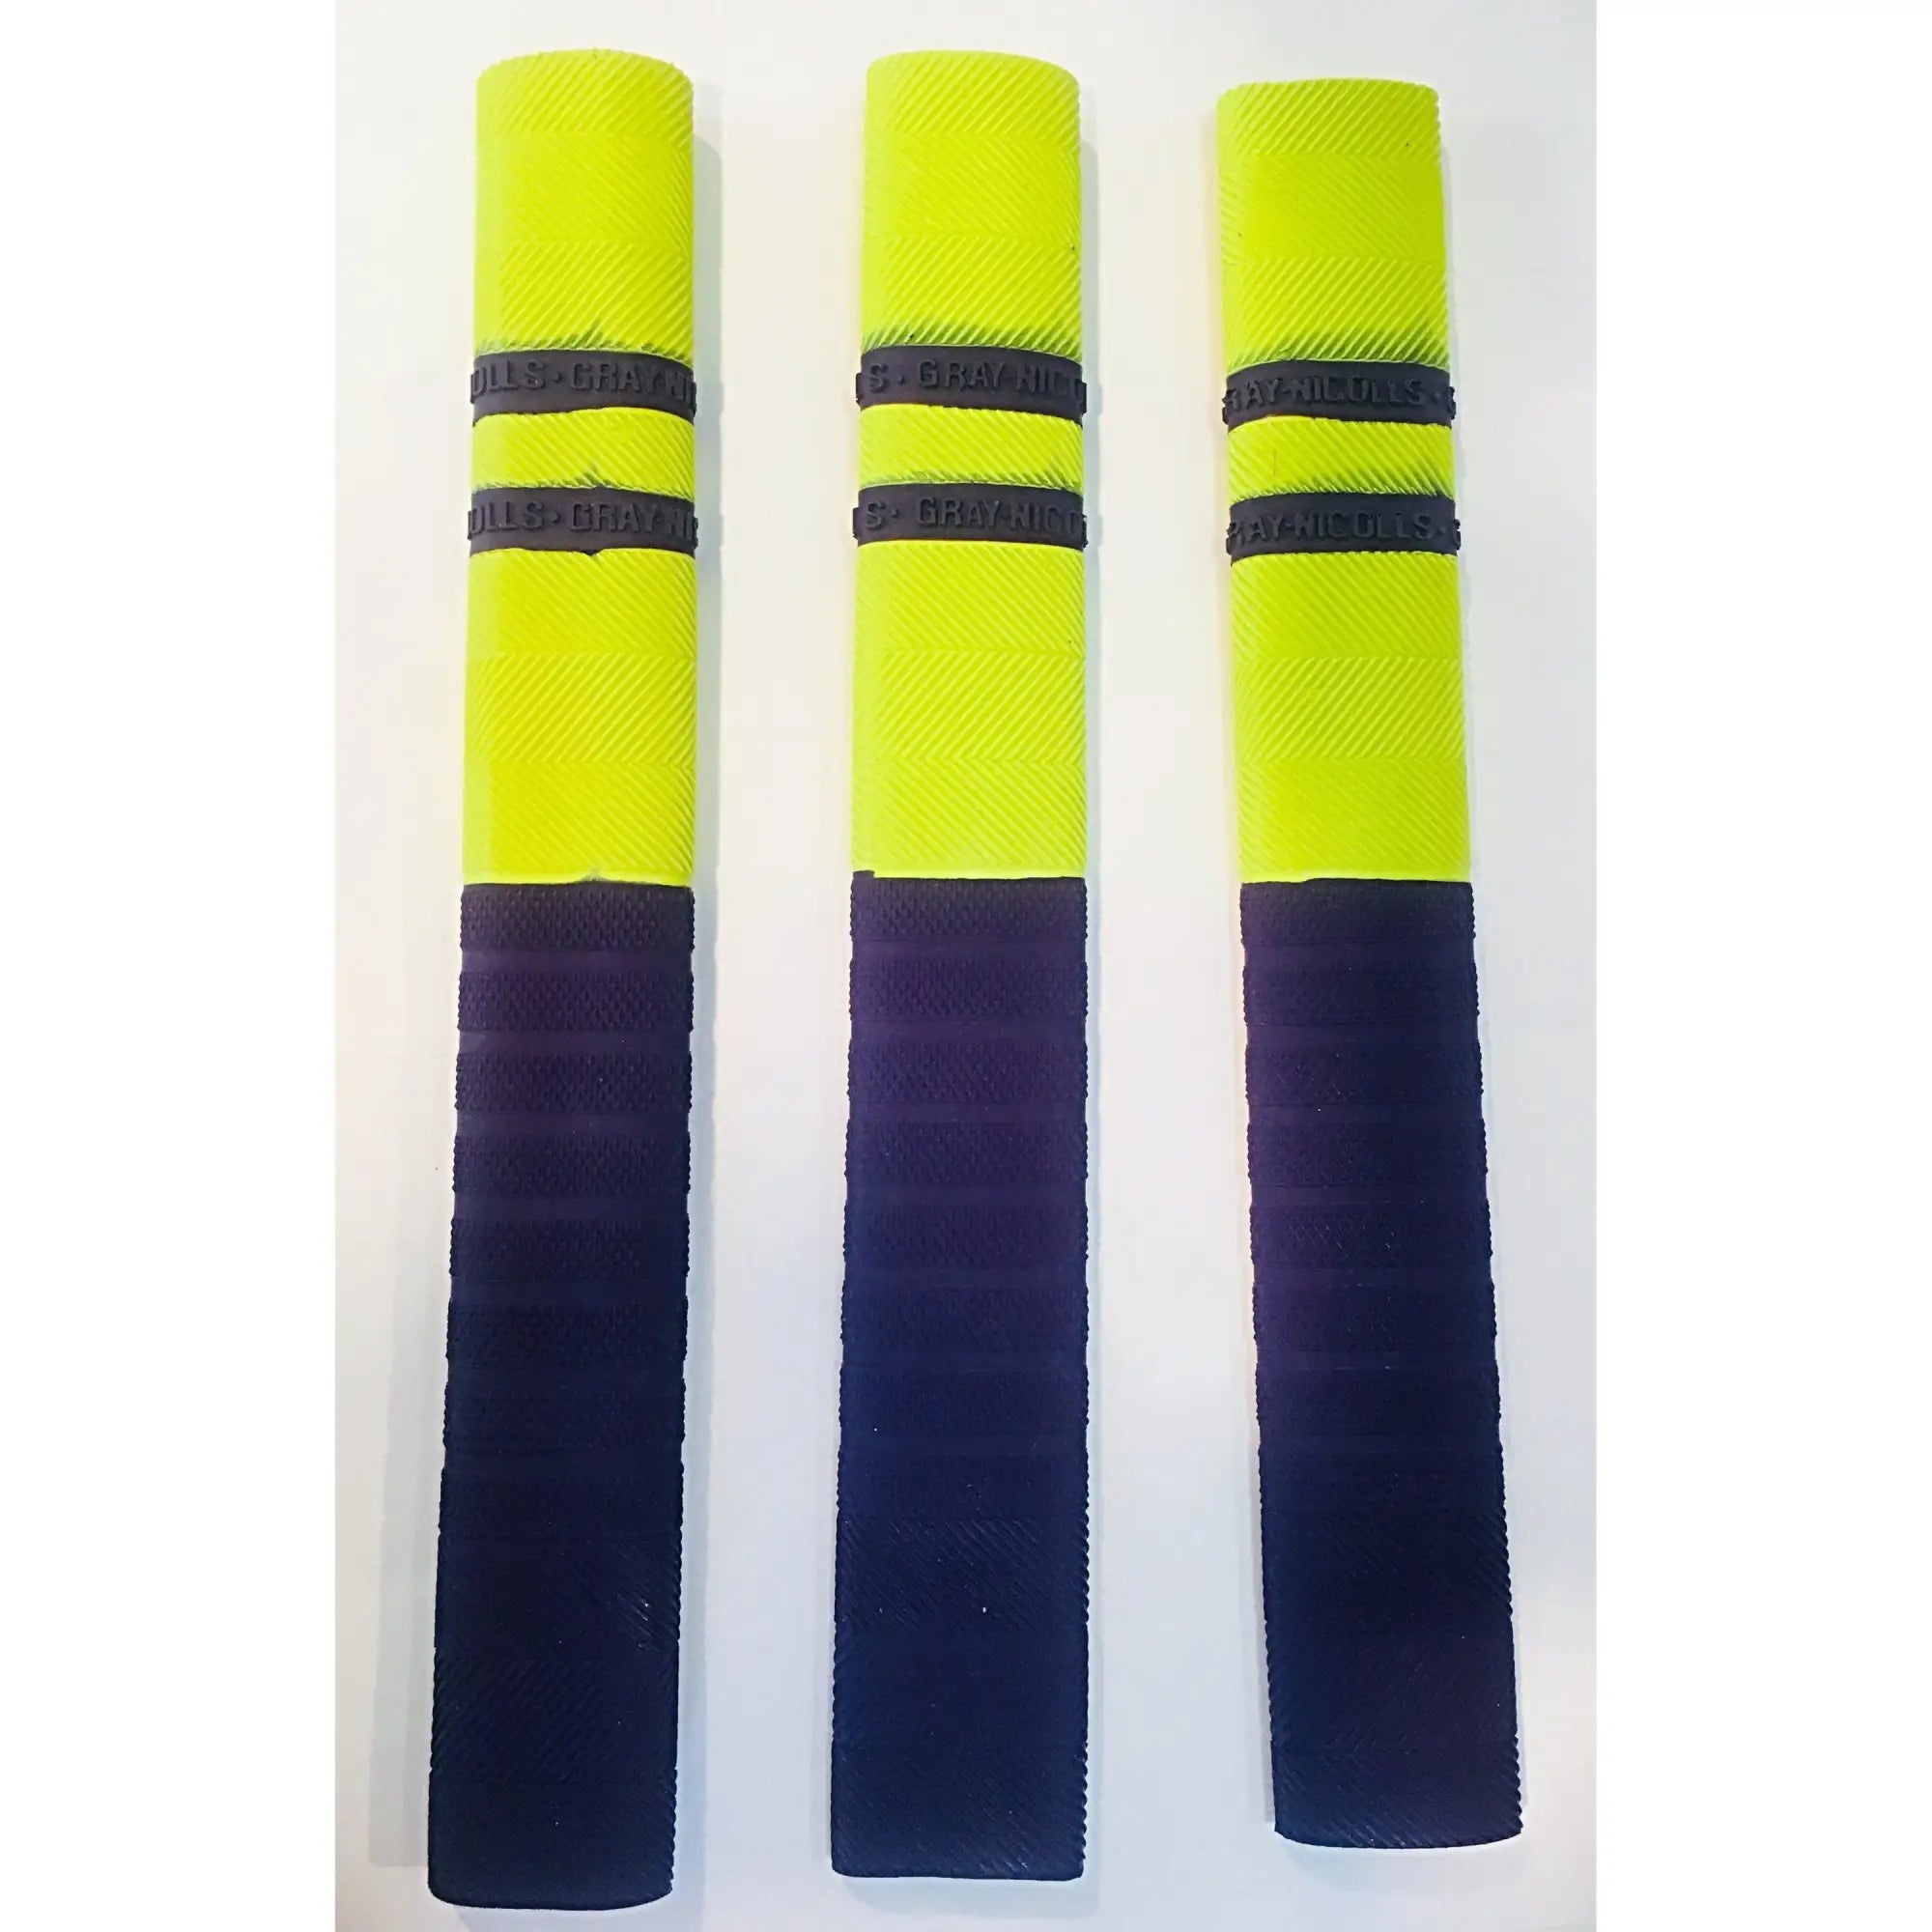 Cricket Bat Handle Grip Zone Various Colors by Gray Nicolls - Cricket Bat Grip